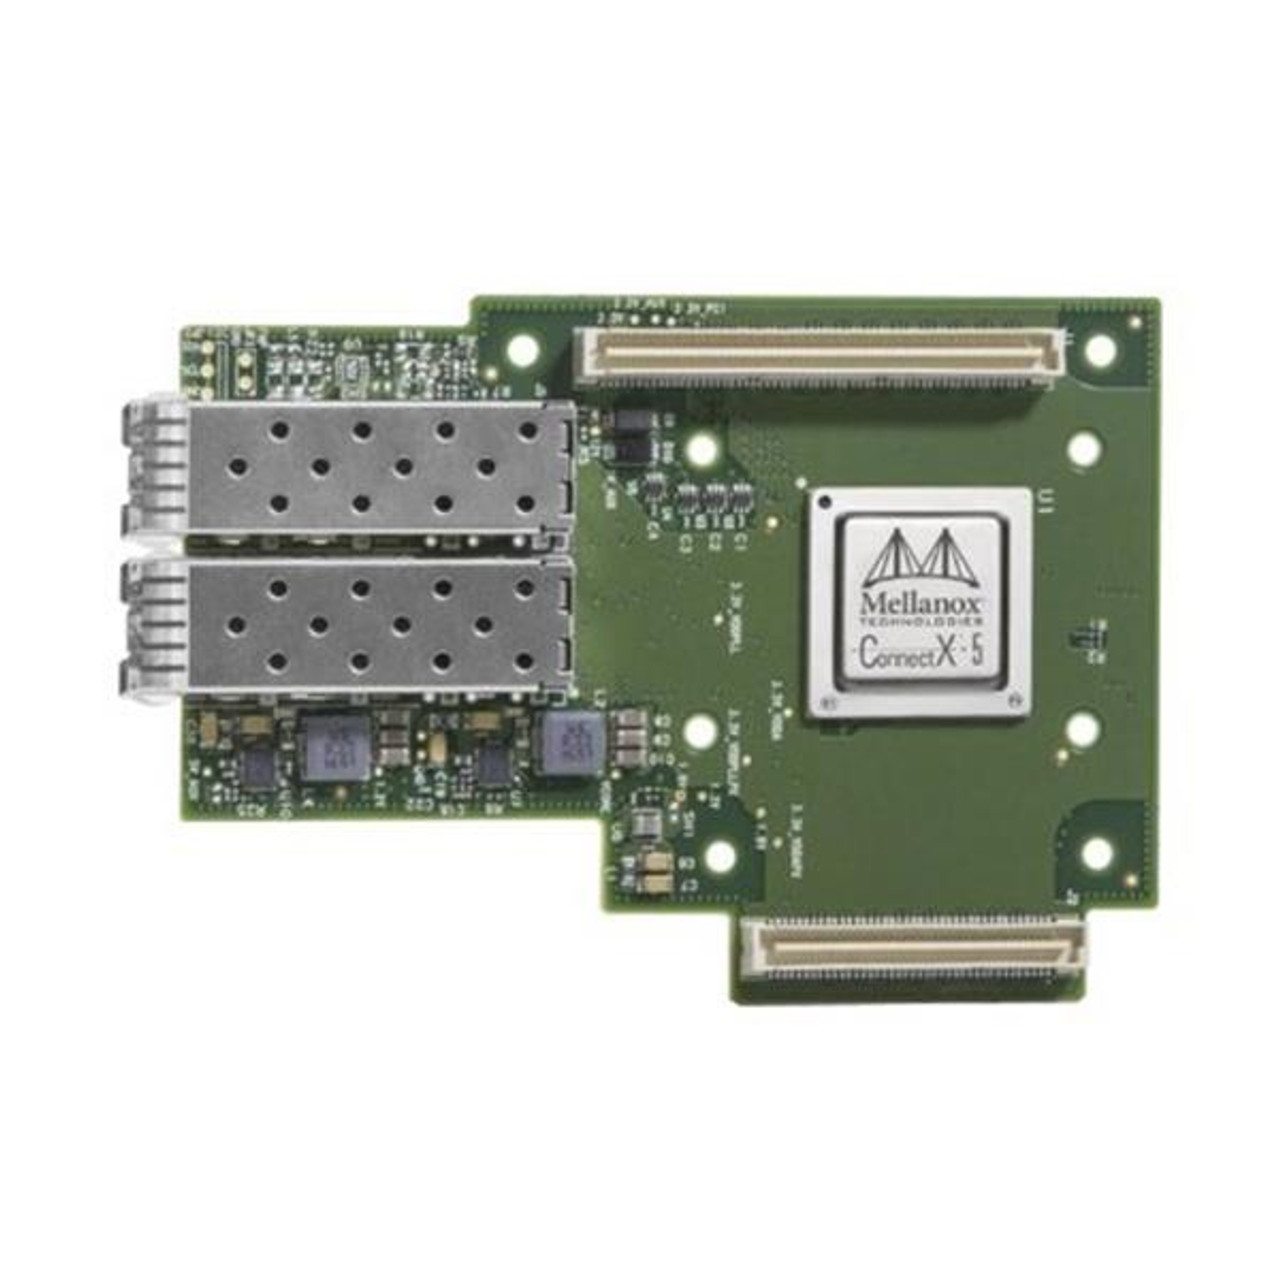 MCX546A-BCAN Mellanox ConnectX-5 Ex EN OCP Dual-Ports QSFP28 40GbE PCI Express 3.0 x16 Network Interface Card No Bracket